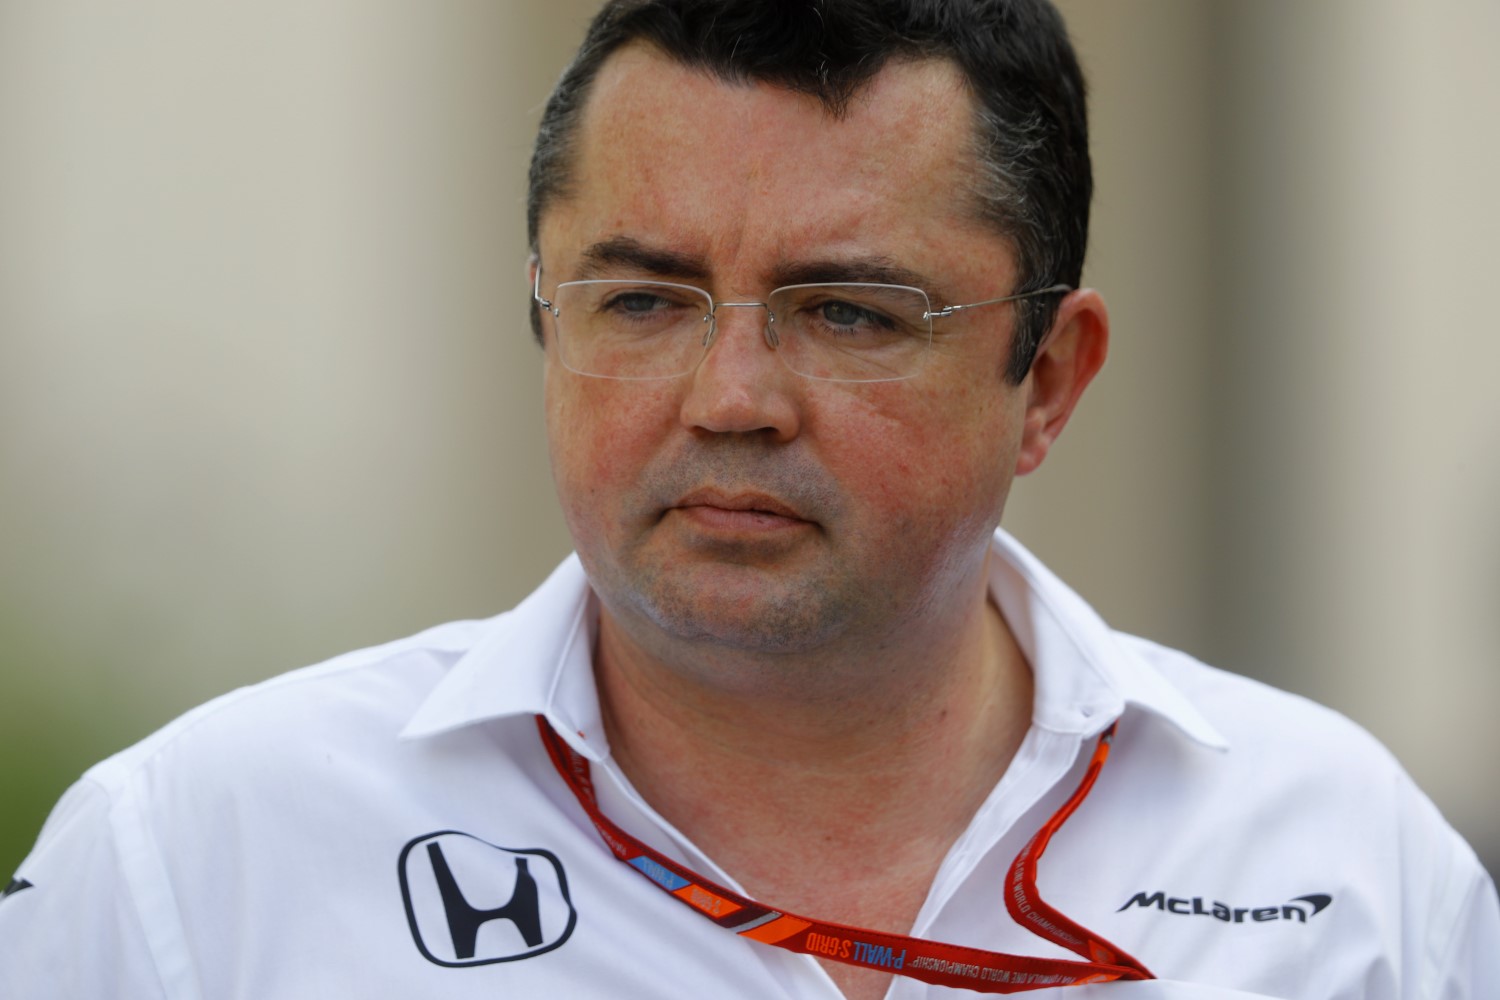 McLaren sticking with Honda says Boullier